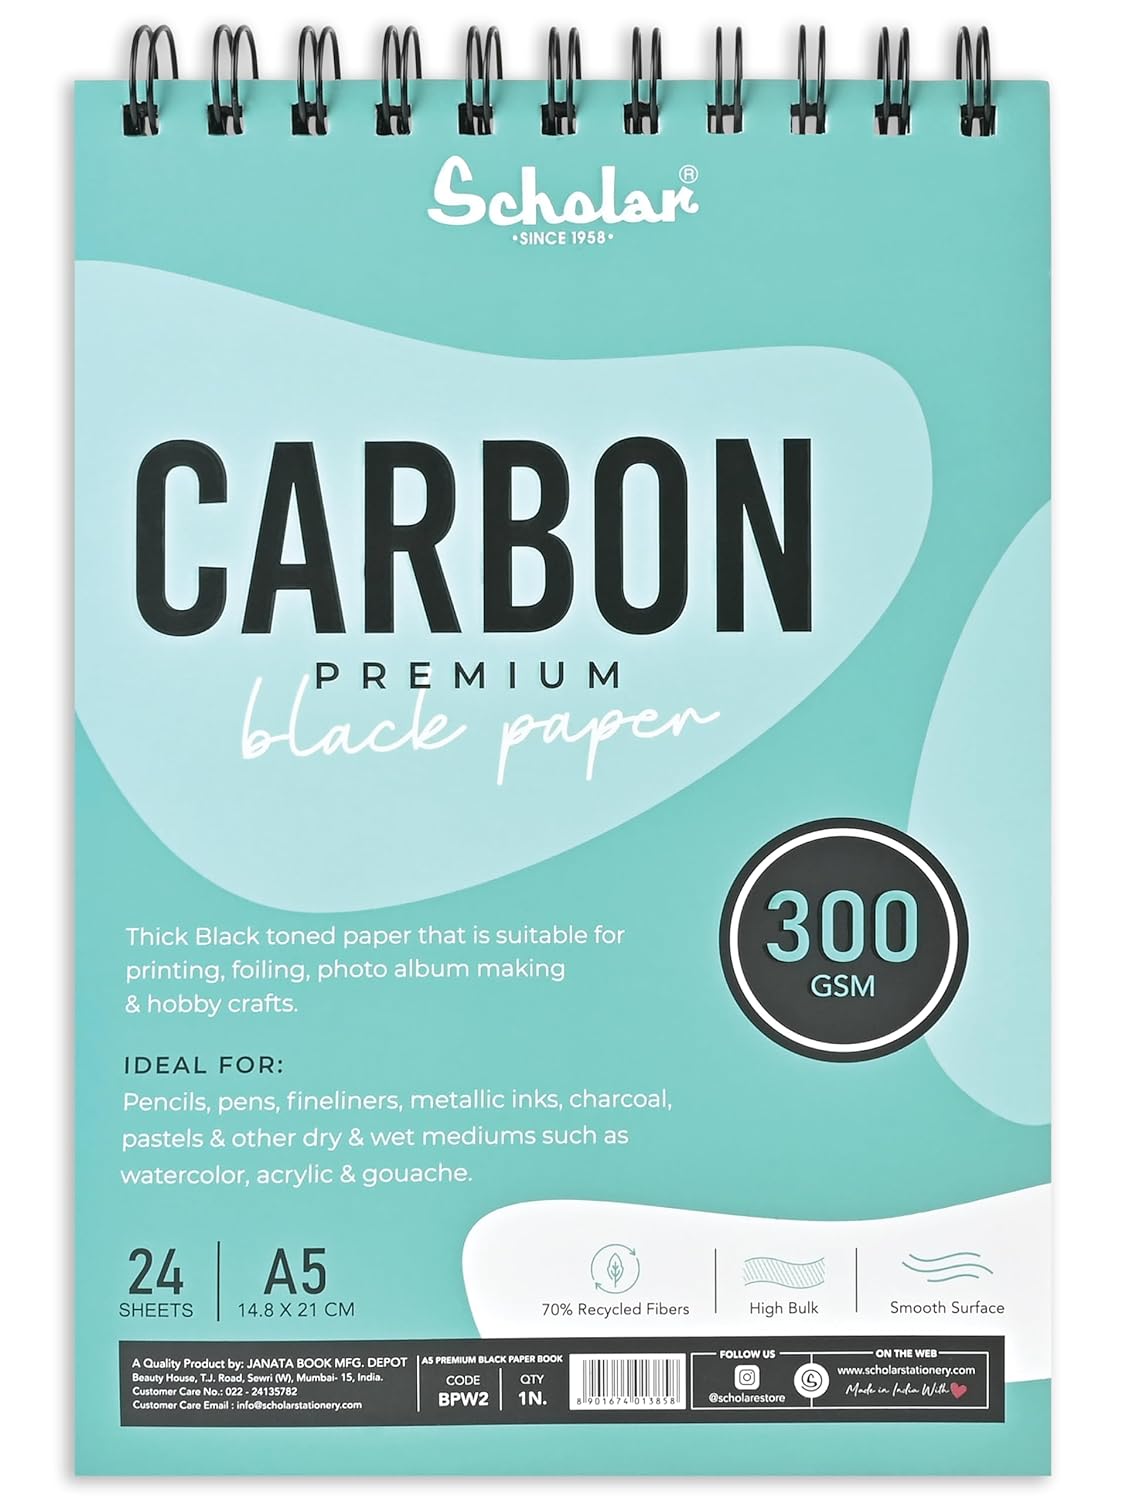 Scholar Carbon 300 GSM Black Paper Sketch Book (24 Sheets, Wire Bound) (A5-A4)